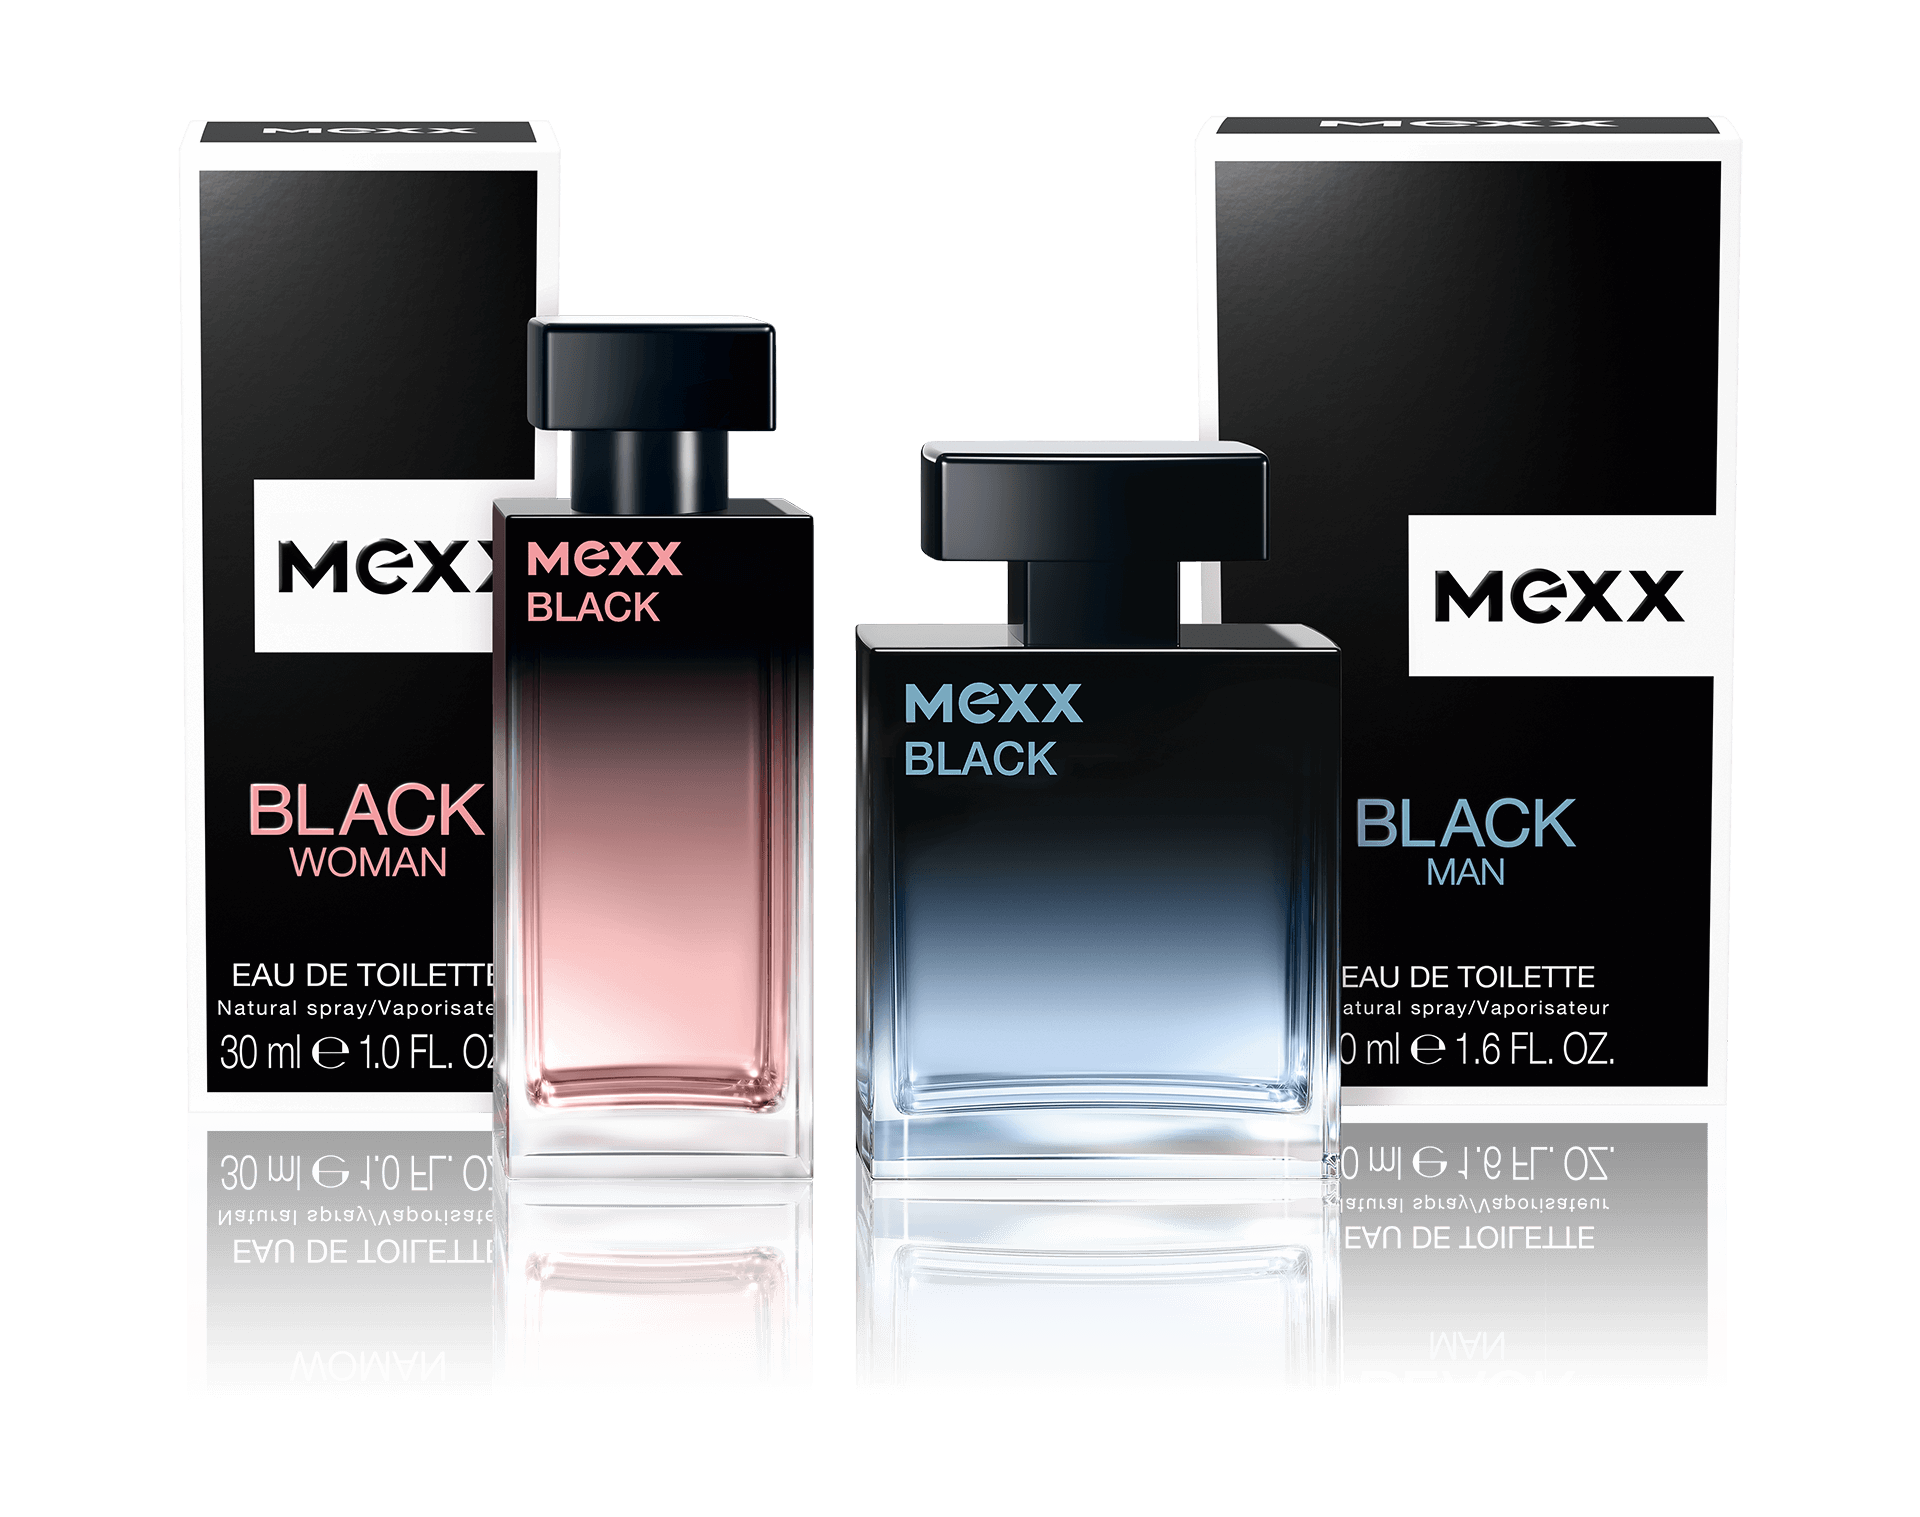 MEXX BLACK Package Shots